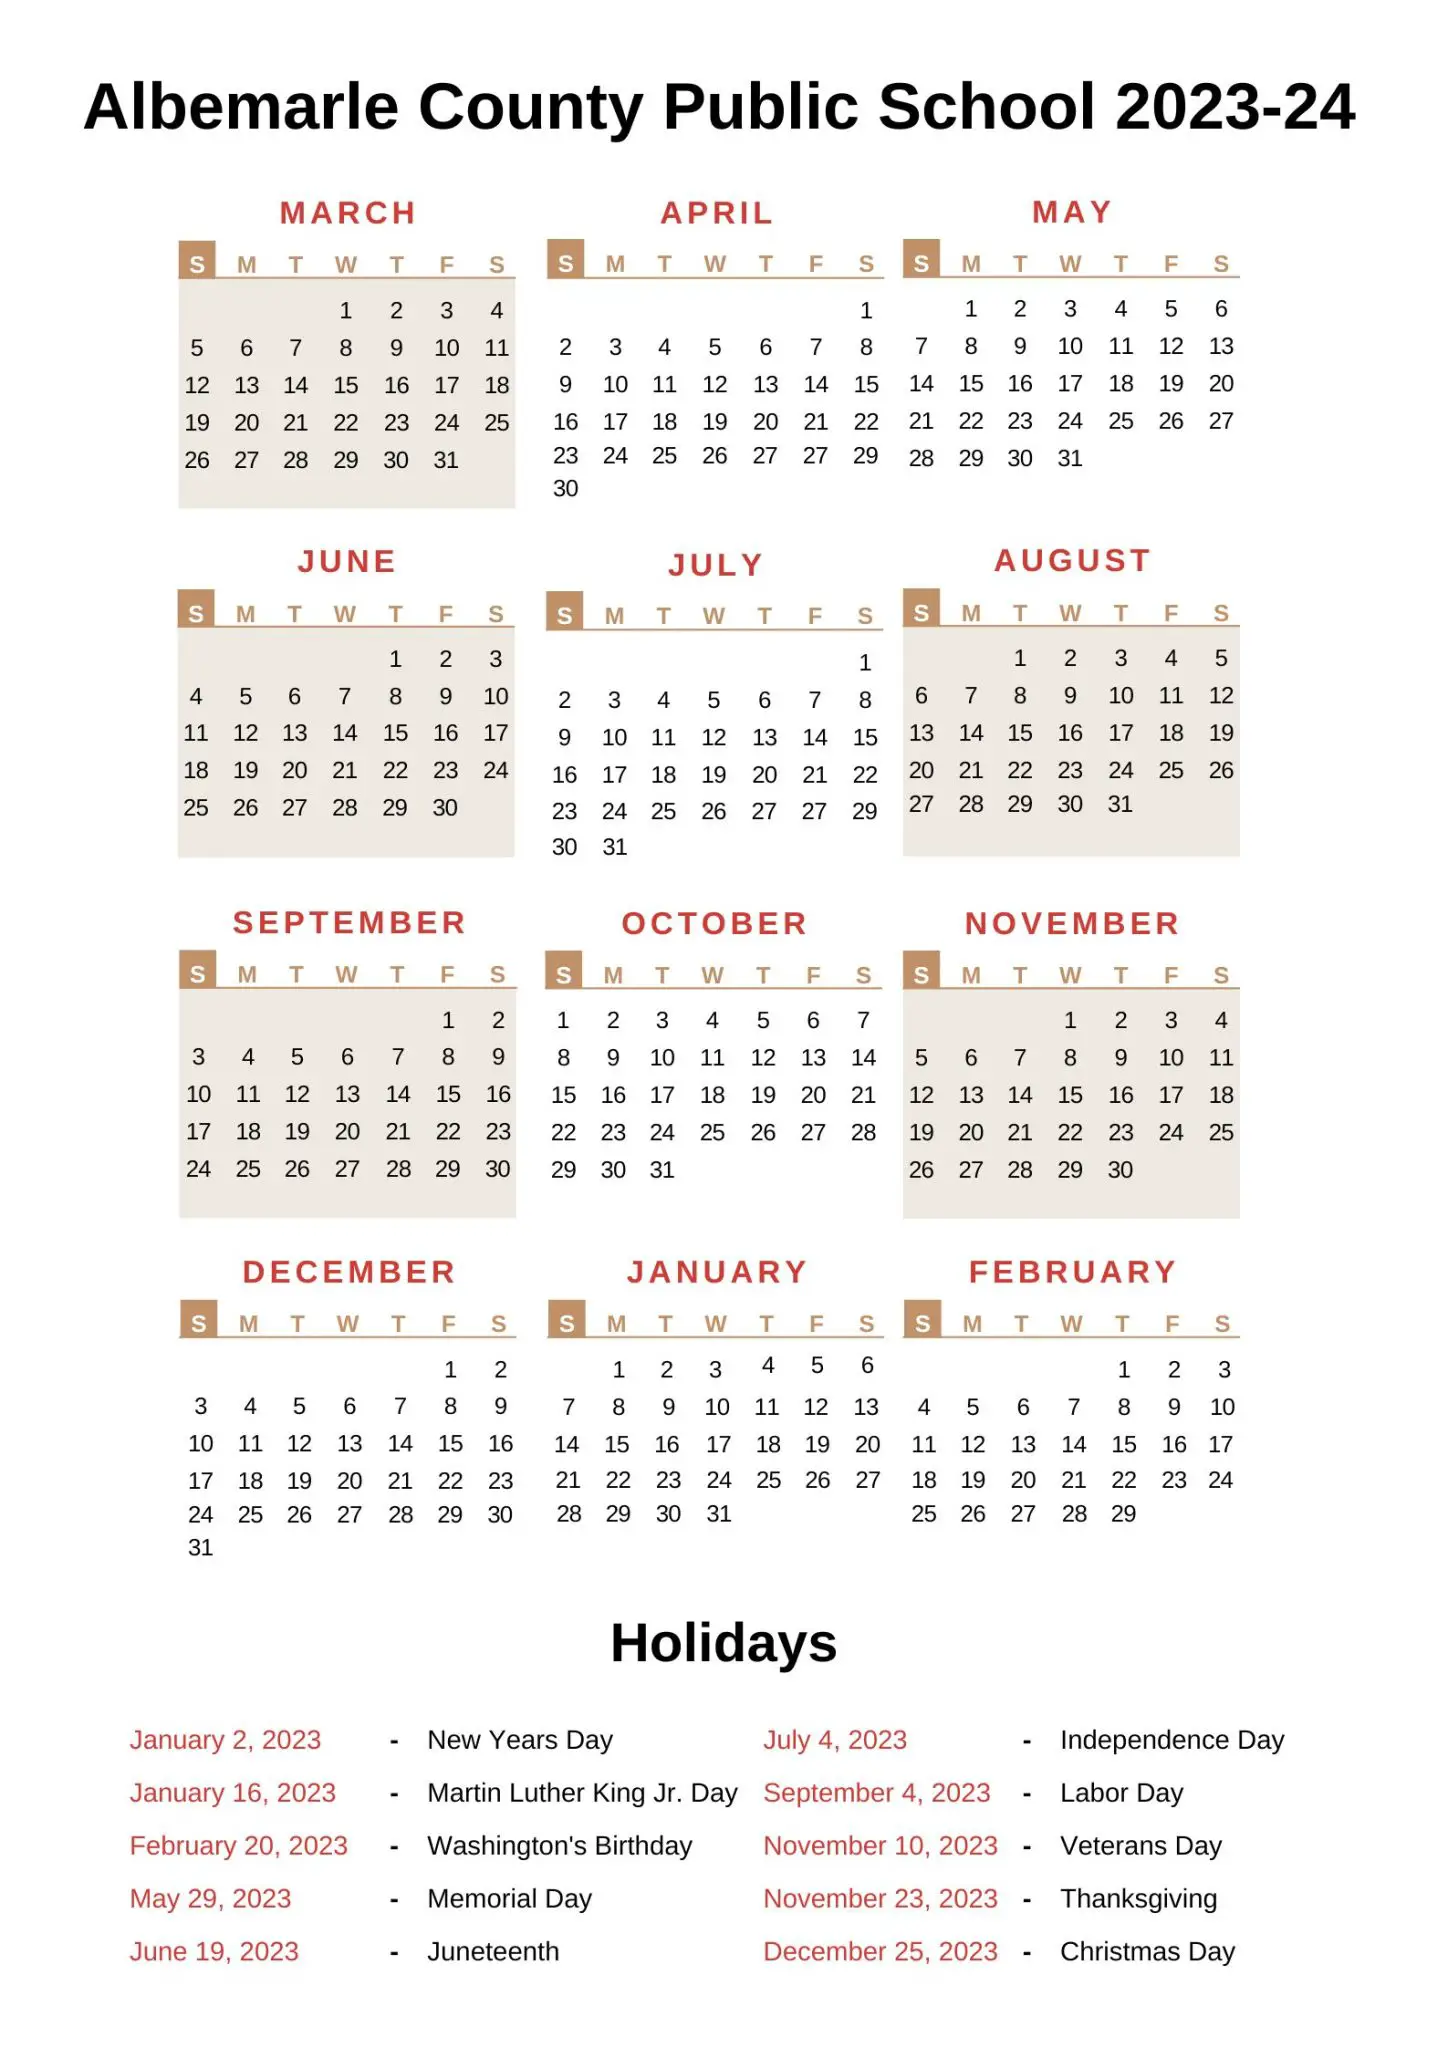 Albemarle County Public Schools Calendar 202324 with Holidays